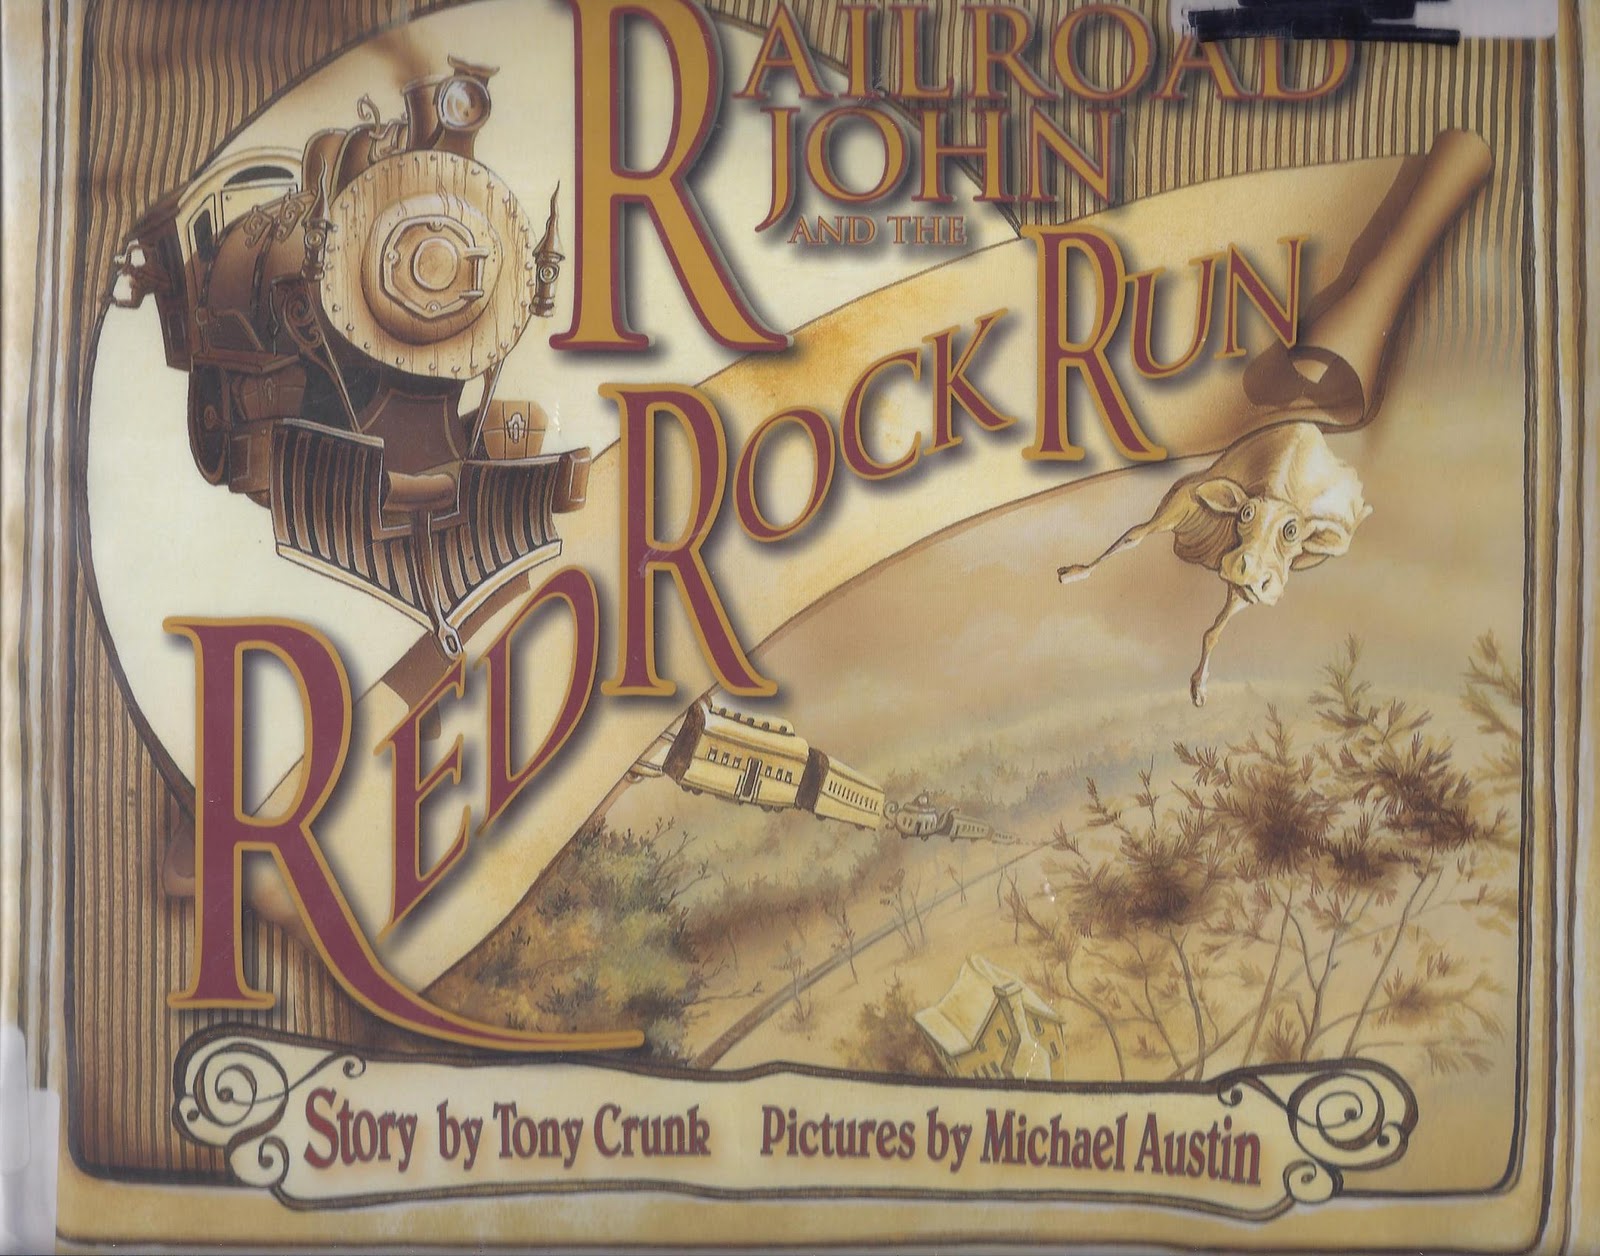 Railroad John and the Red Rock Run Tony Crunk and Michael Austin